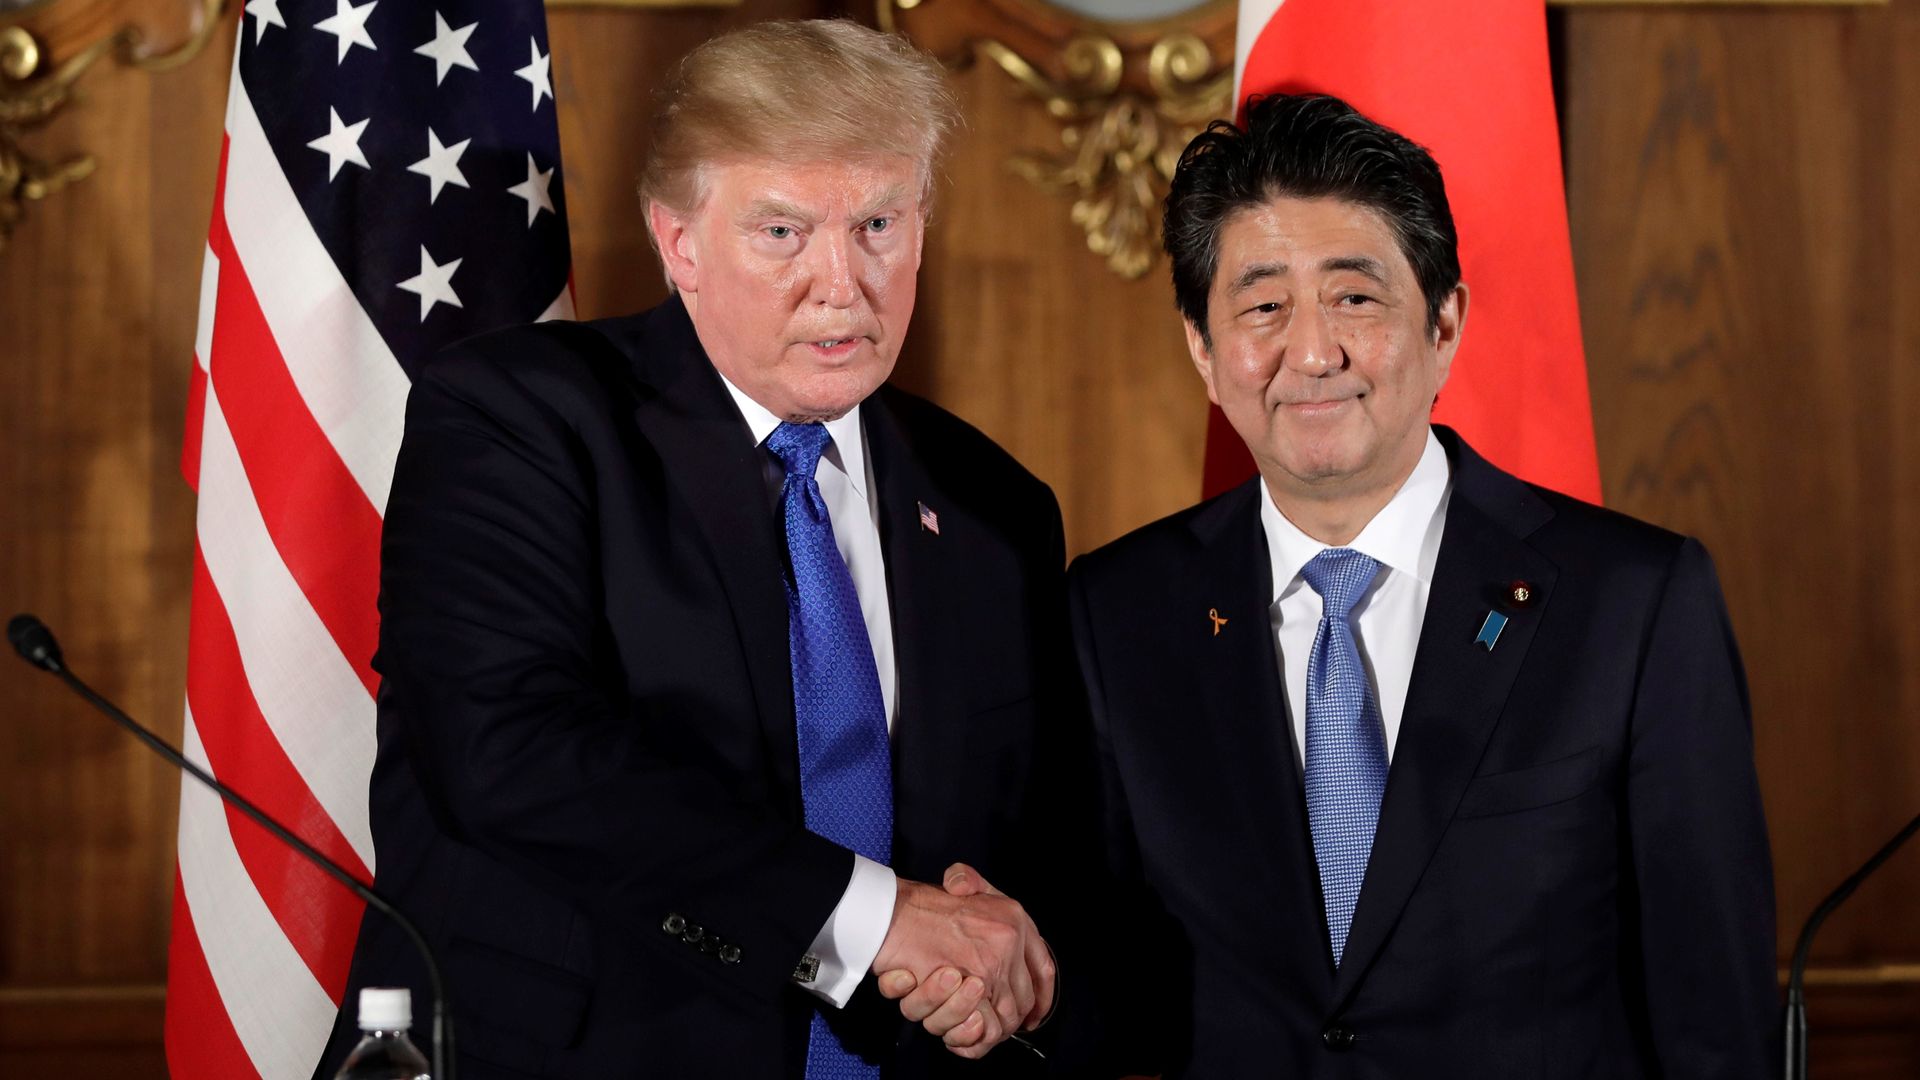 President Trump and Japanese Prime Minister Abe.